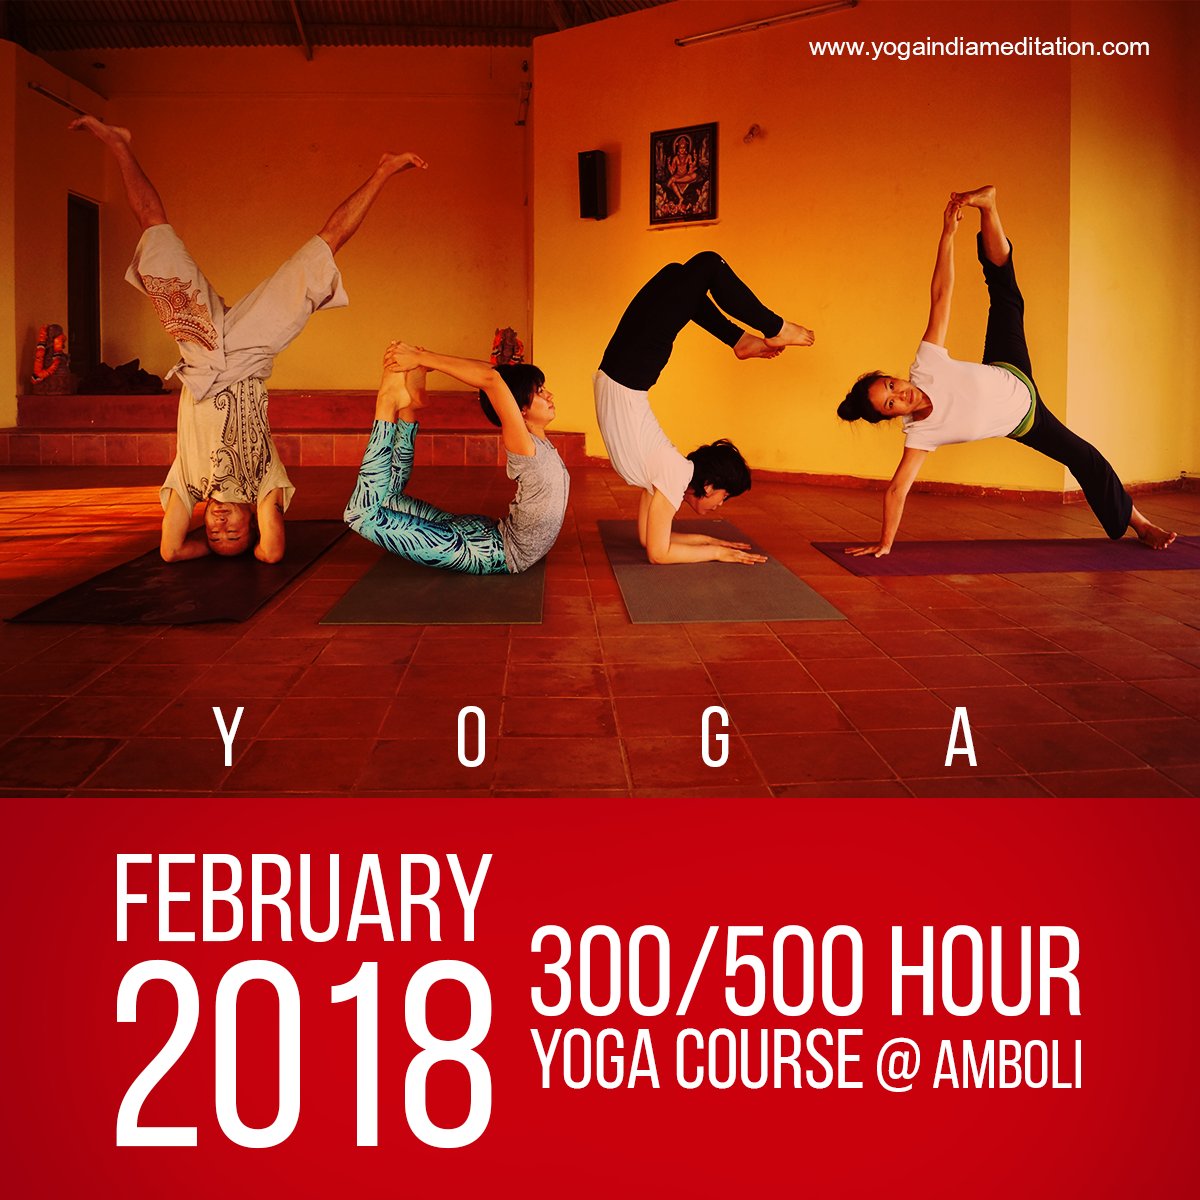 A snap from Amboli, where our students train to be certified Yoga Teachers. They formed 'YOGA', through yoga! 
Visit us - yogaindiameditation.com
#YogaIndia #Yoga #YogaPostures #YogaCourse